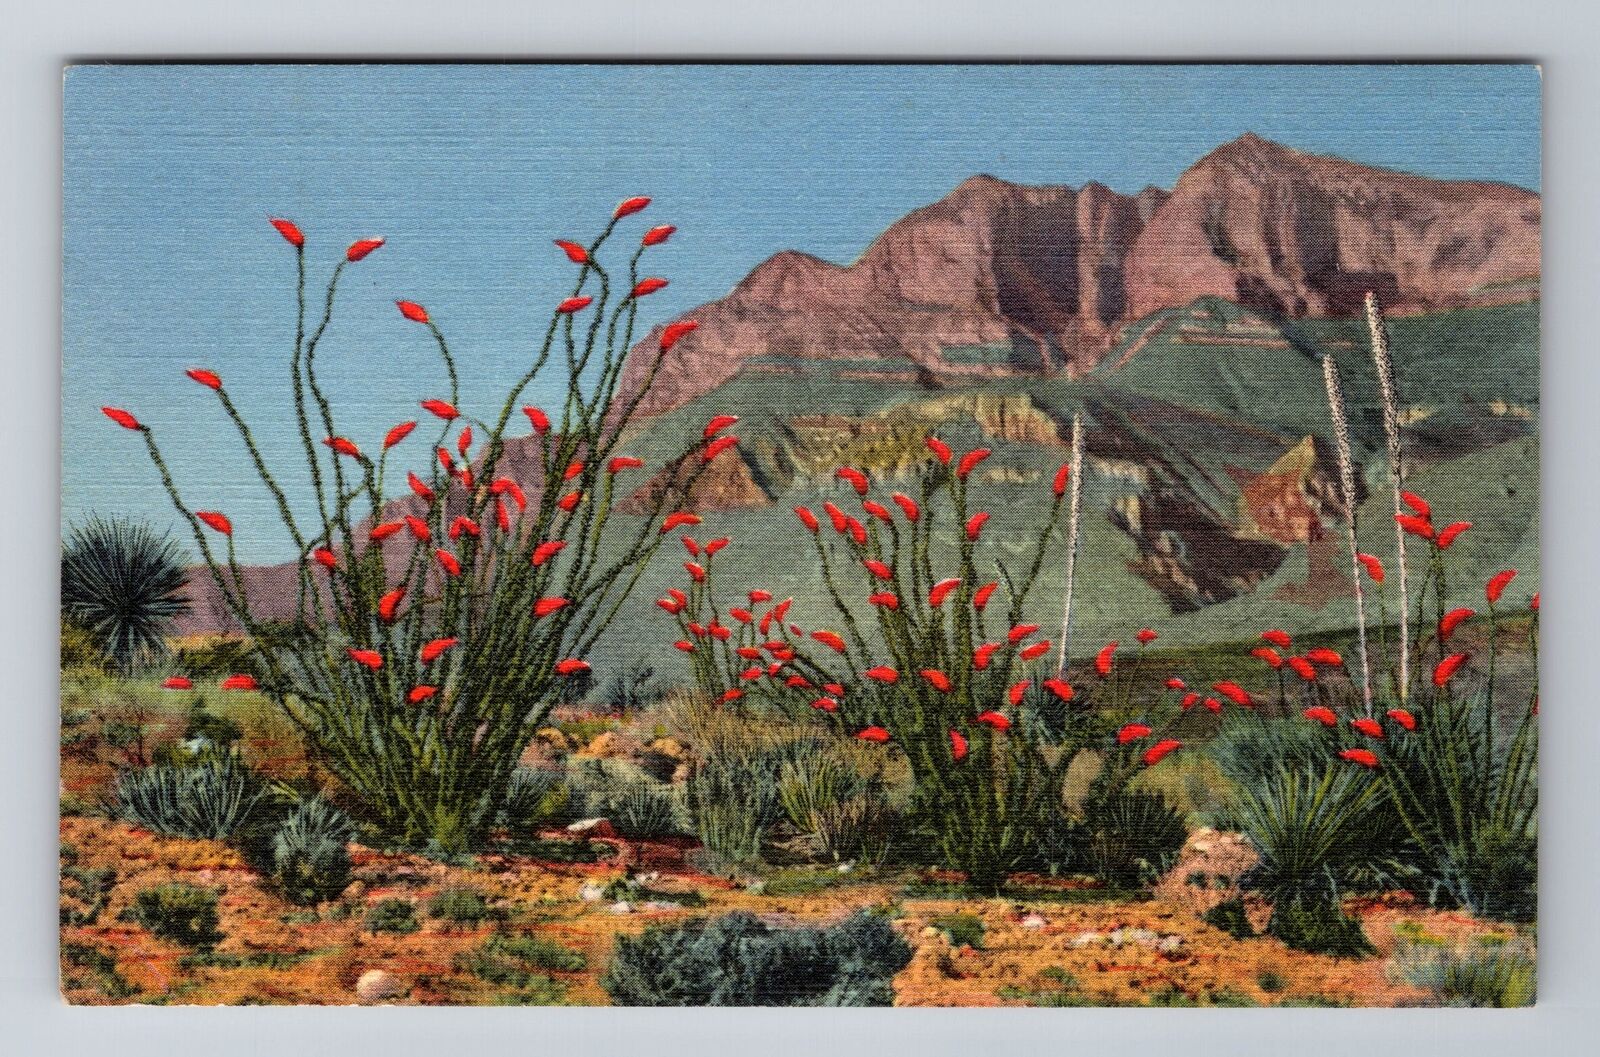 NM-New Mexico, Ocotillo Cactus, Antique, Vintage Souvenir Postcard